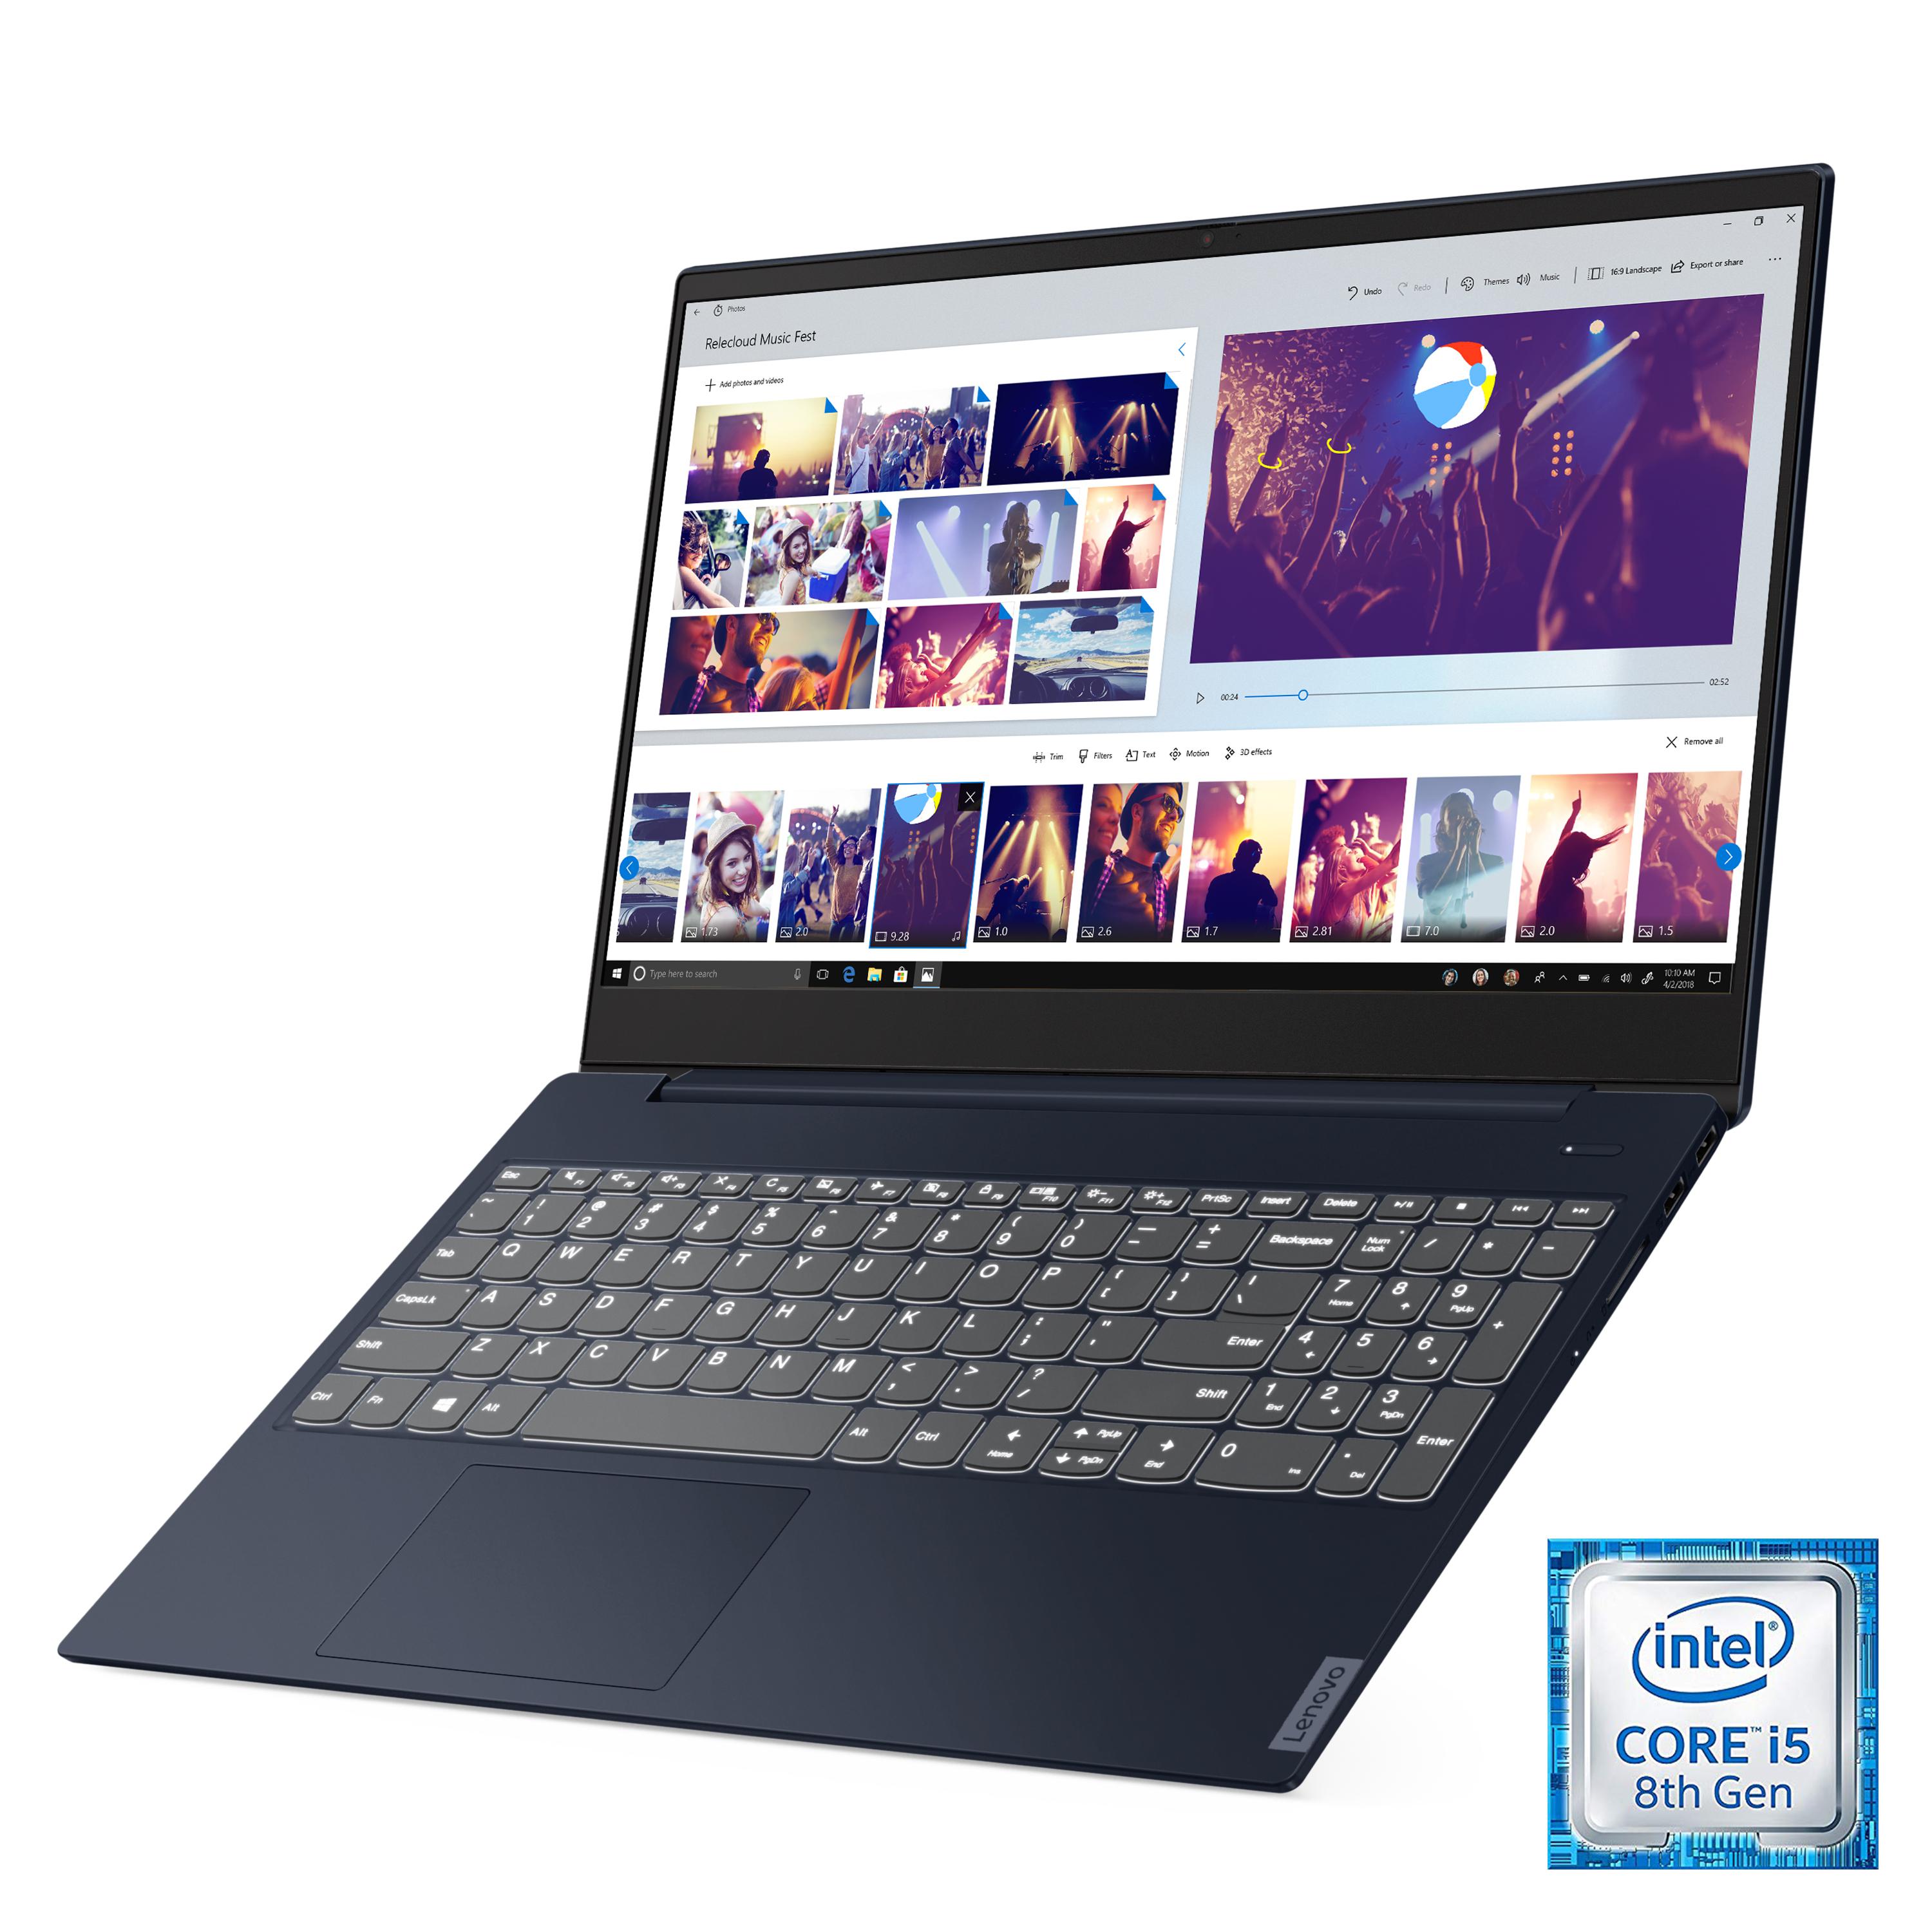 Lenovo ideapad S340 15.6" Laptop, Intel Core i5-8265U Quad-Core Processor, 8GB Memory, 128GB Solid State Drive, Windows 10 - Abyss Blue - 81N800H2US - image 1 of 3